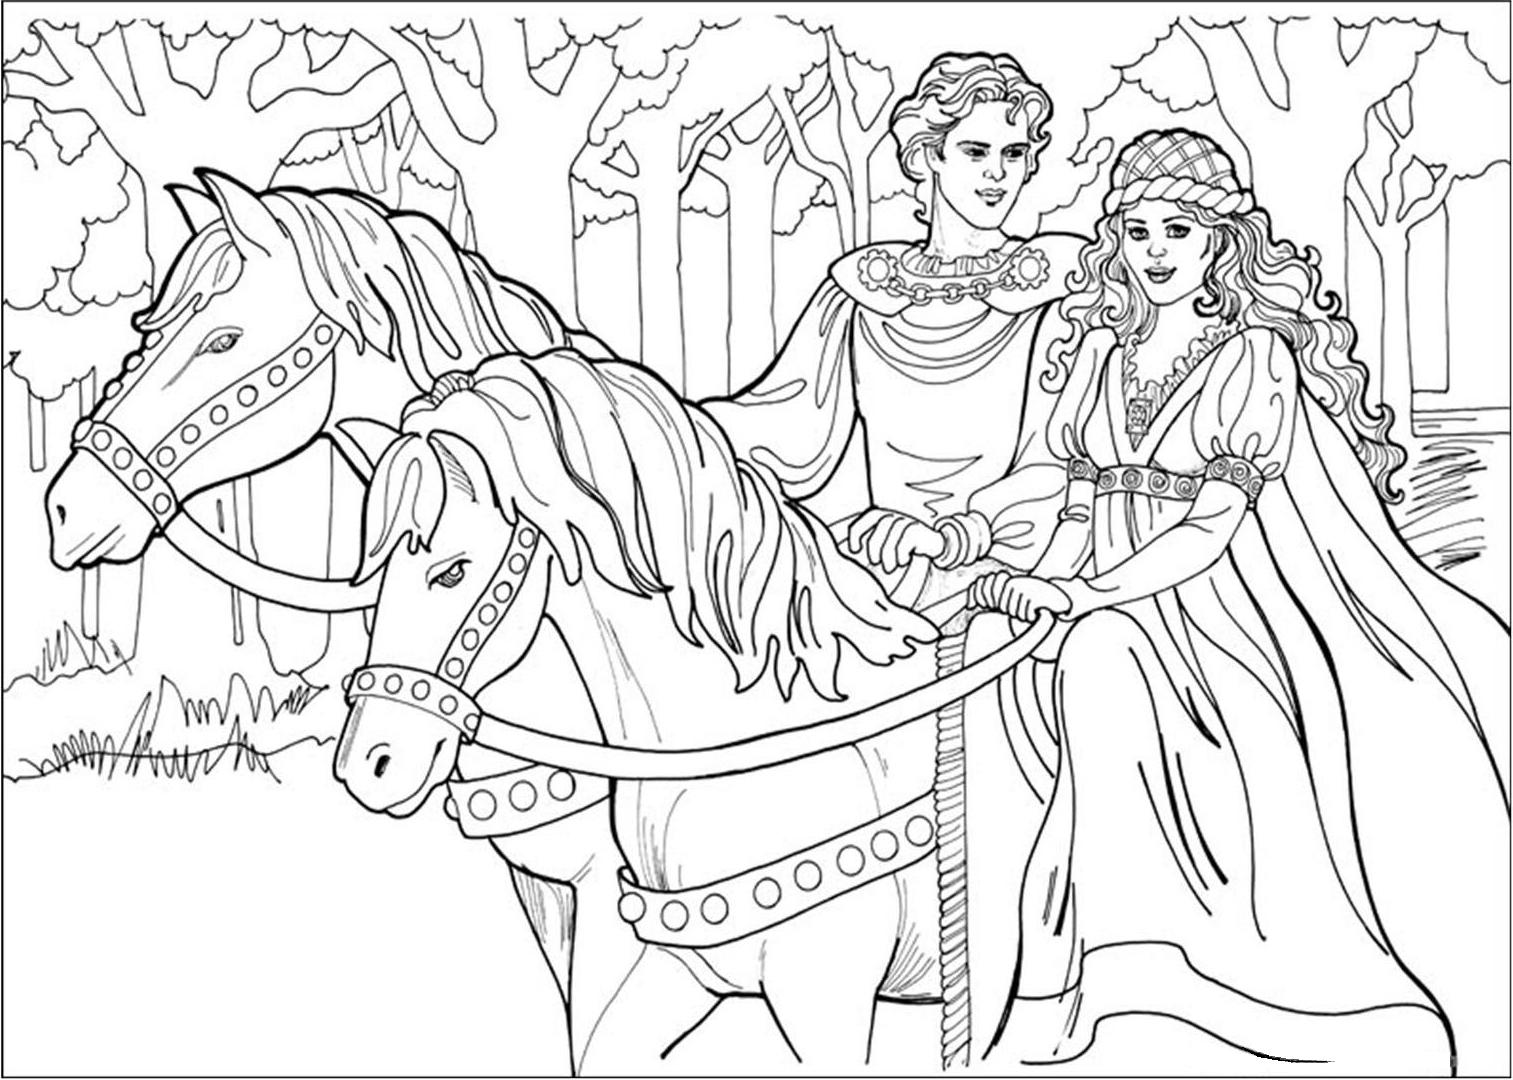 Príncipe e princesa a cavalo